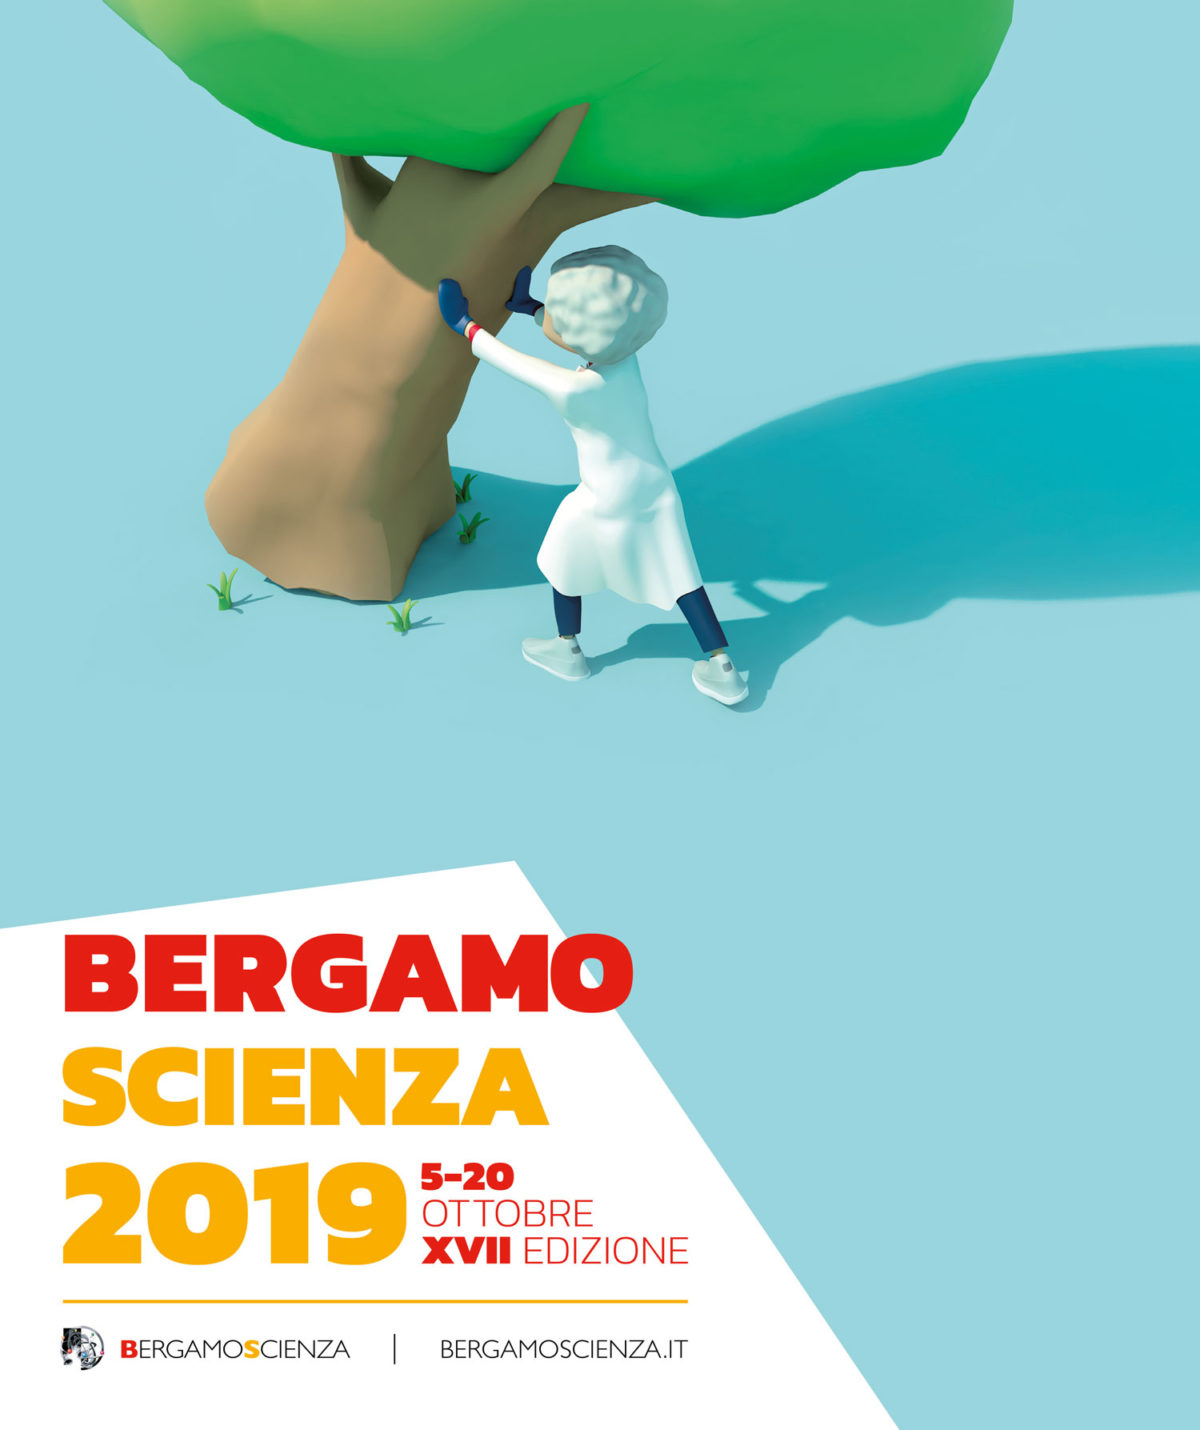 Bergamo Scienza 2019